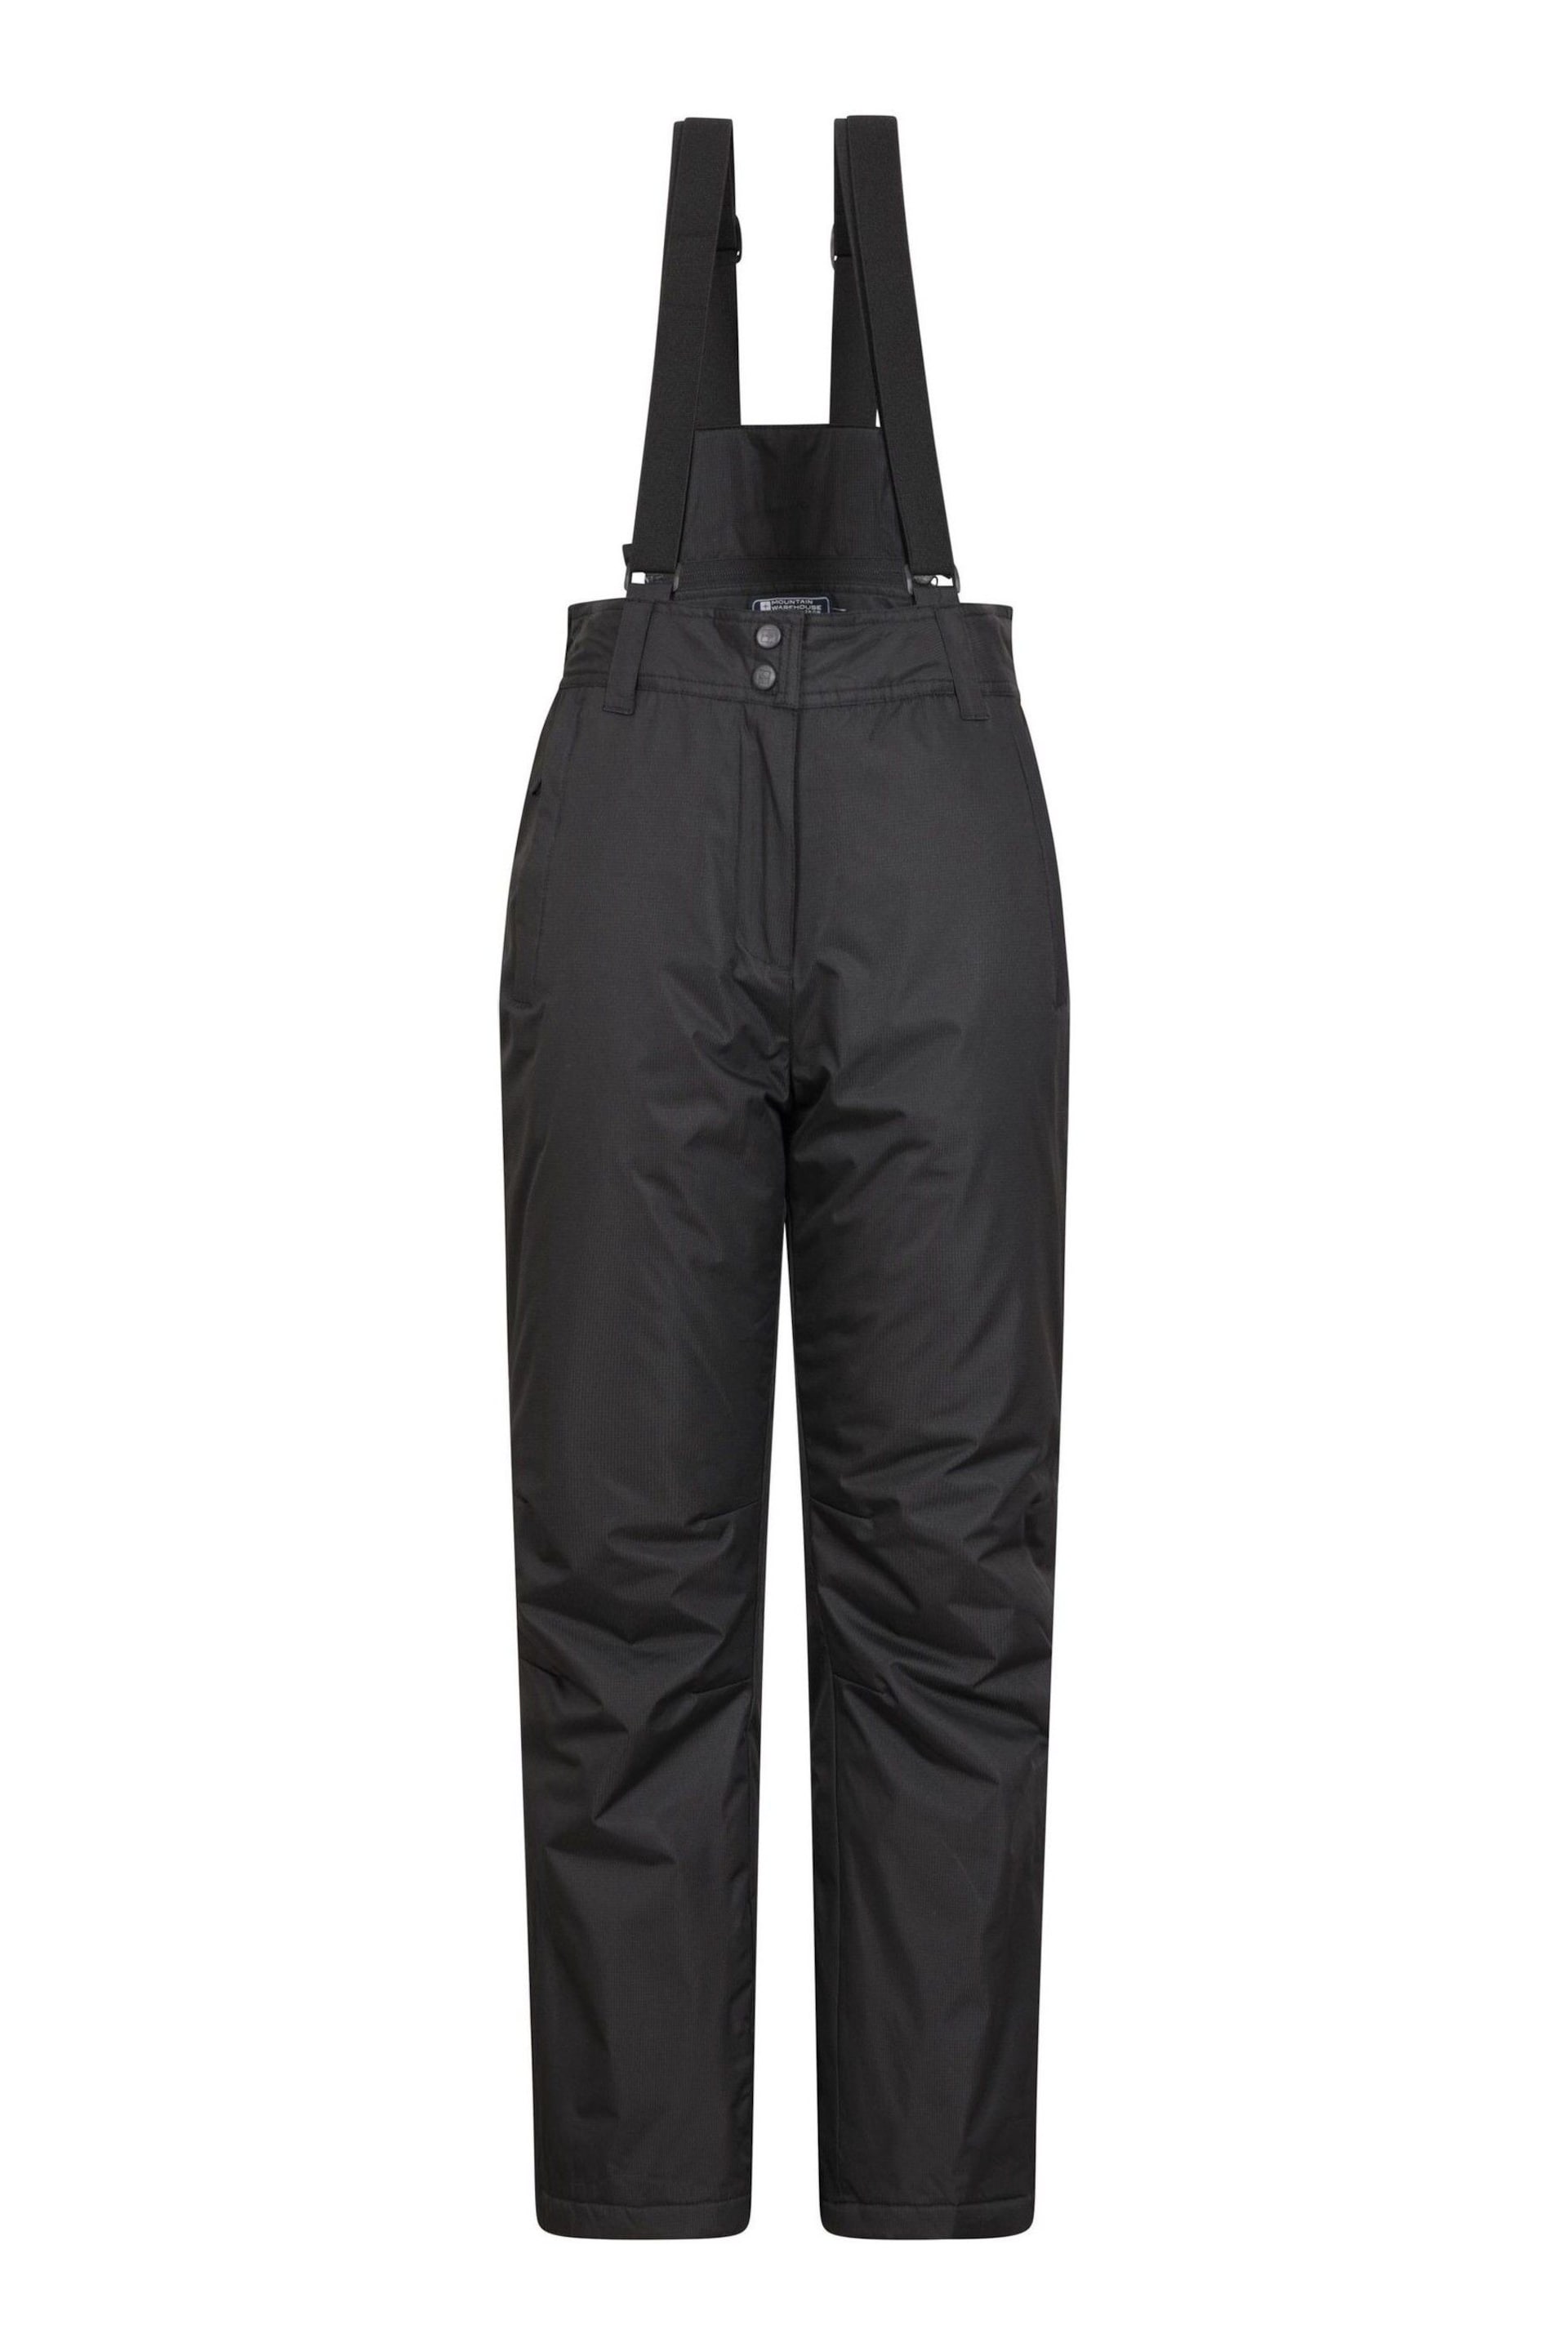 Mountain Warehouse Black Womens Moon Ski Trousers - Image 1 of 5